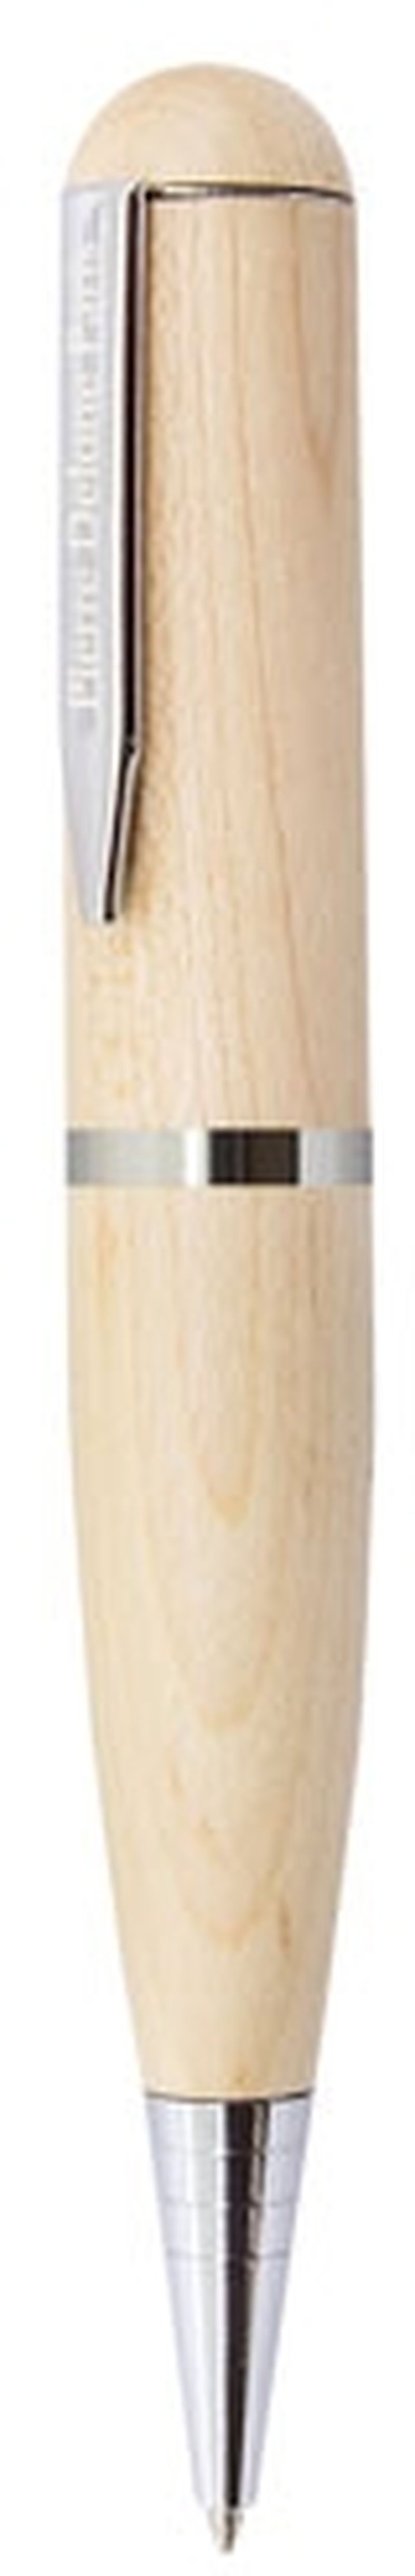 Dřevěné pero s 32GB USB